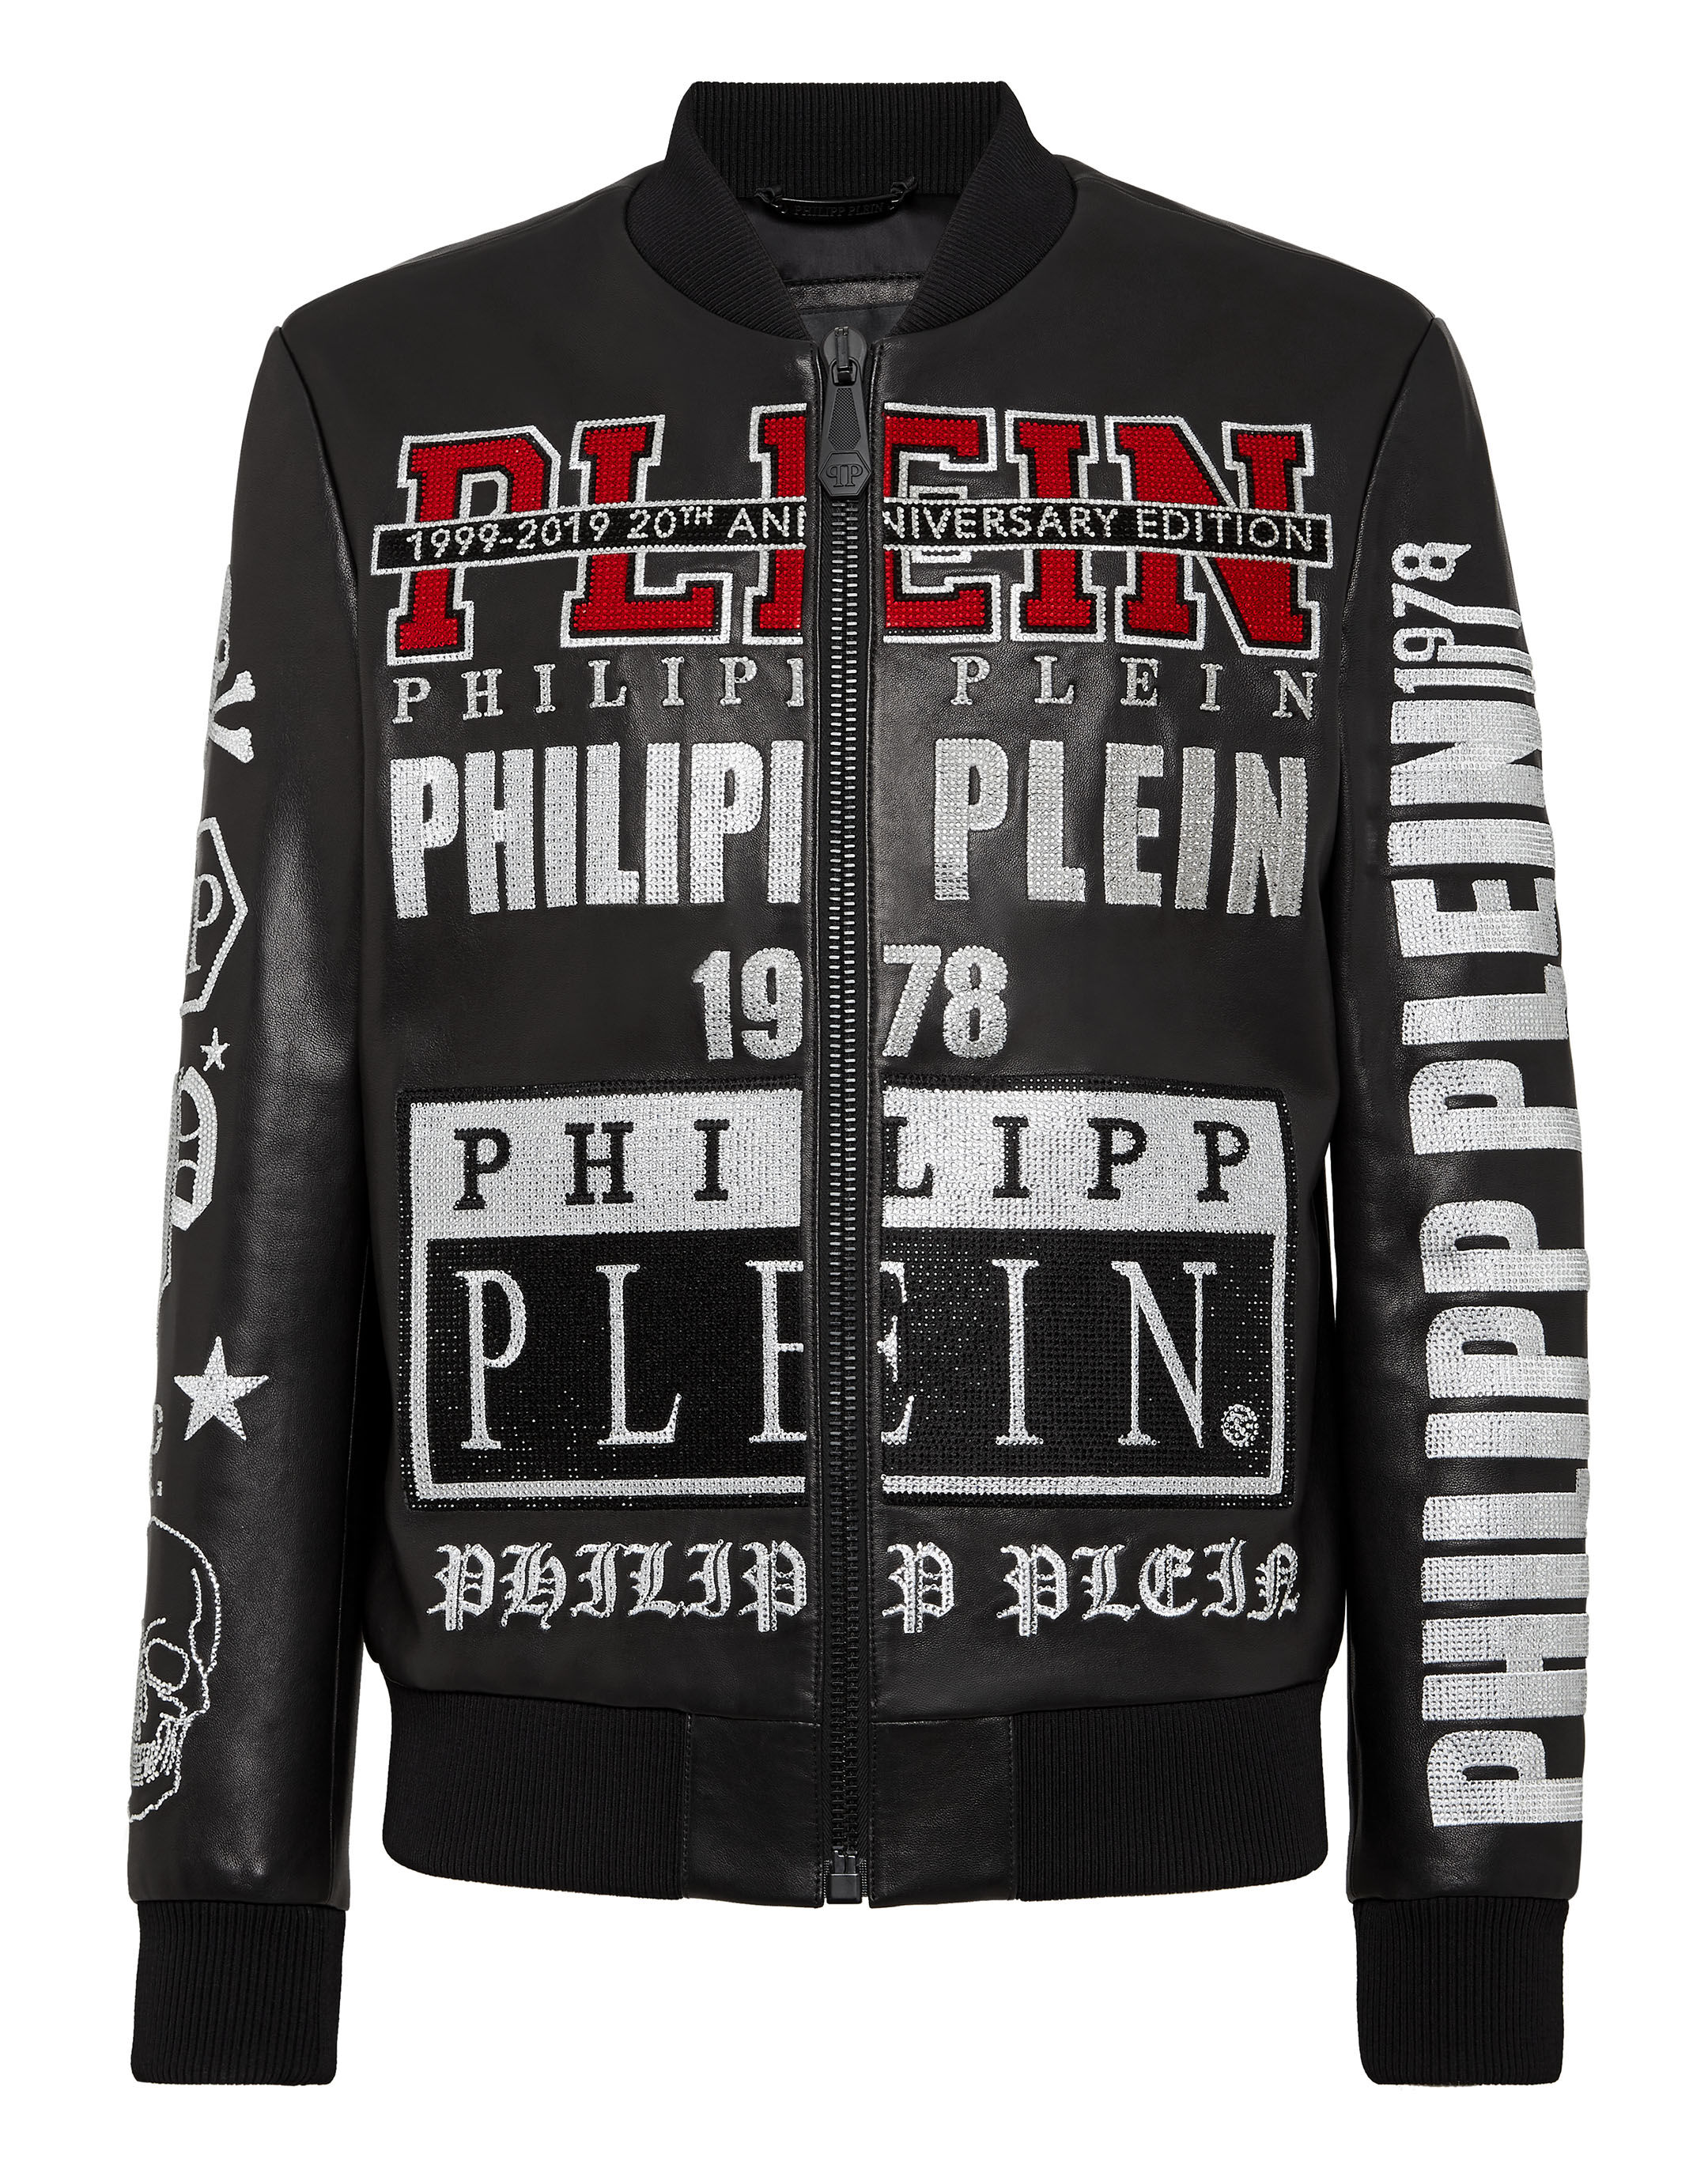 Philipp Plein Men's Clothing Outlet 